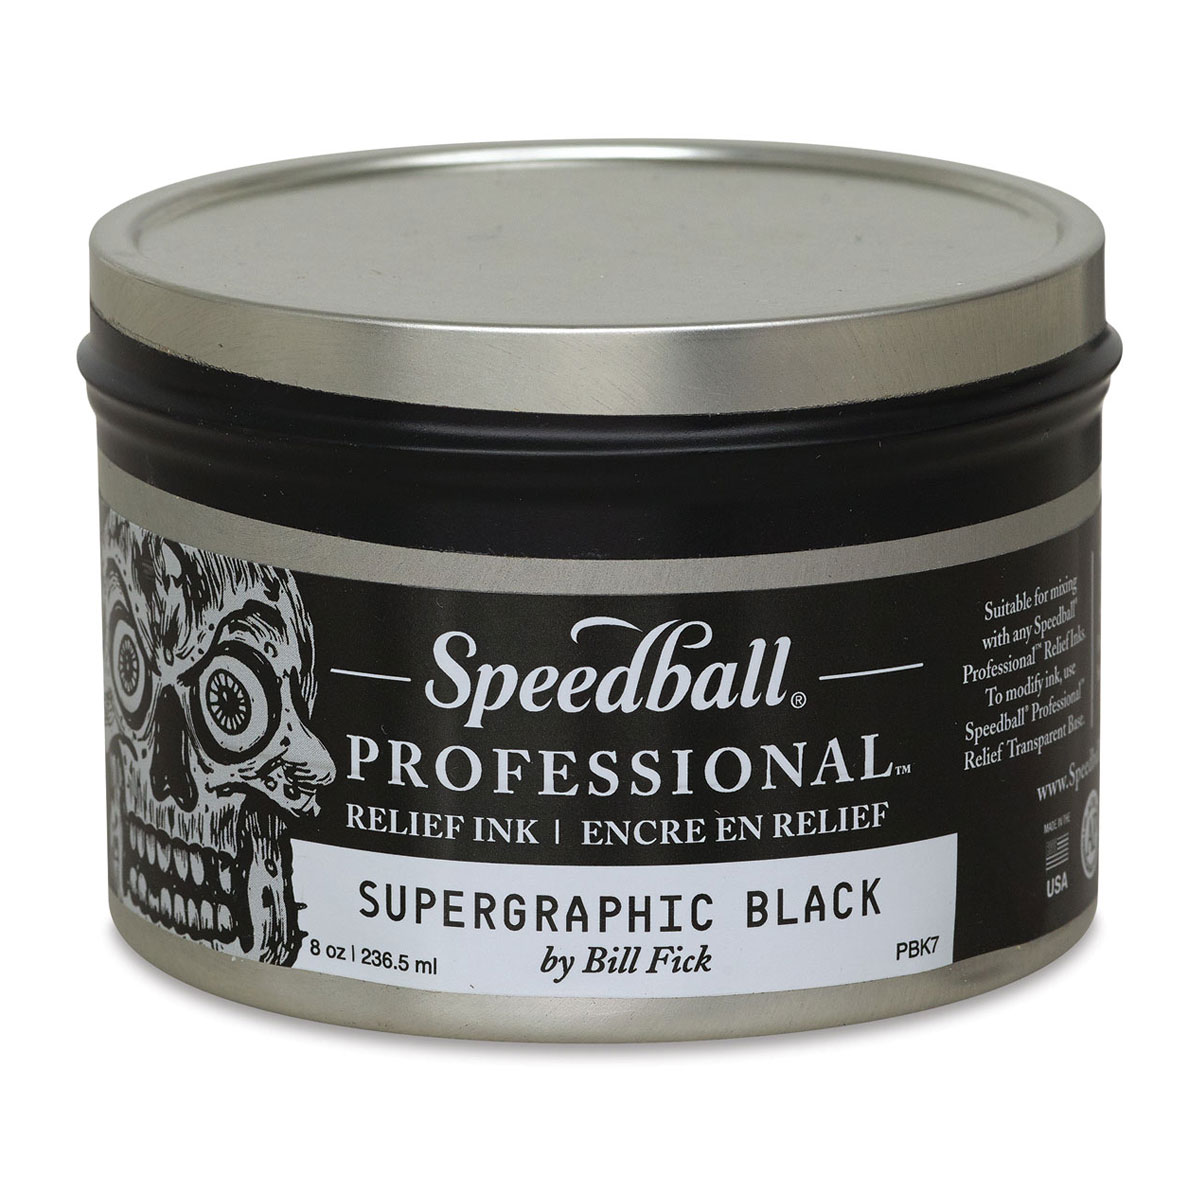 Speedball Professional Relief Ink - Supergraphic Black, 8 oz